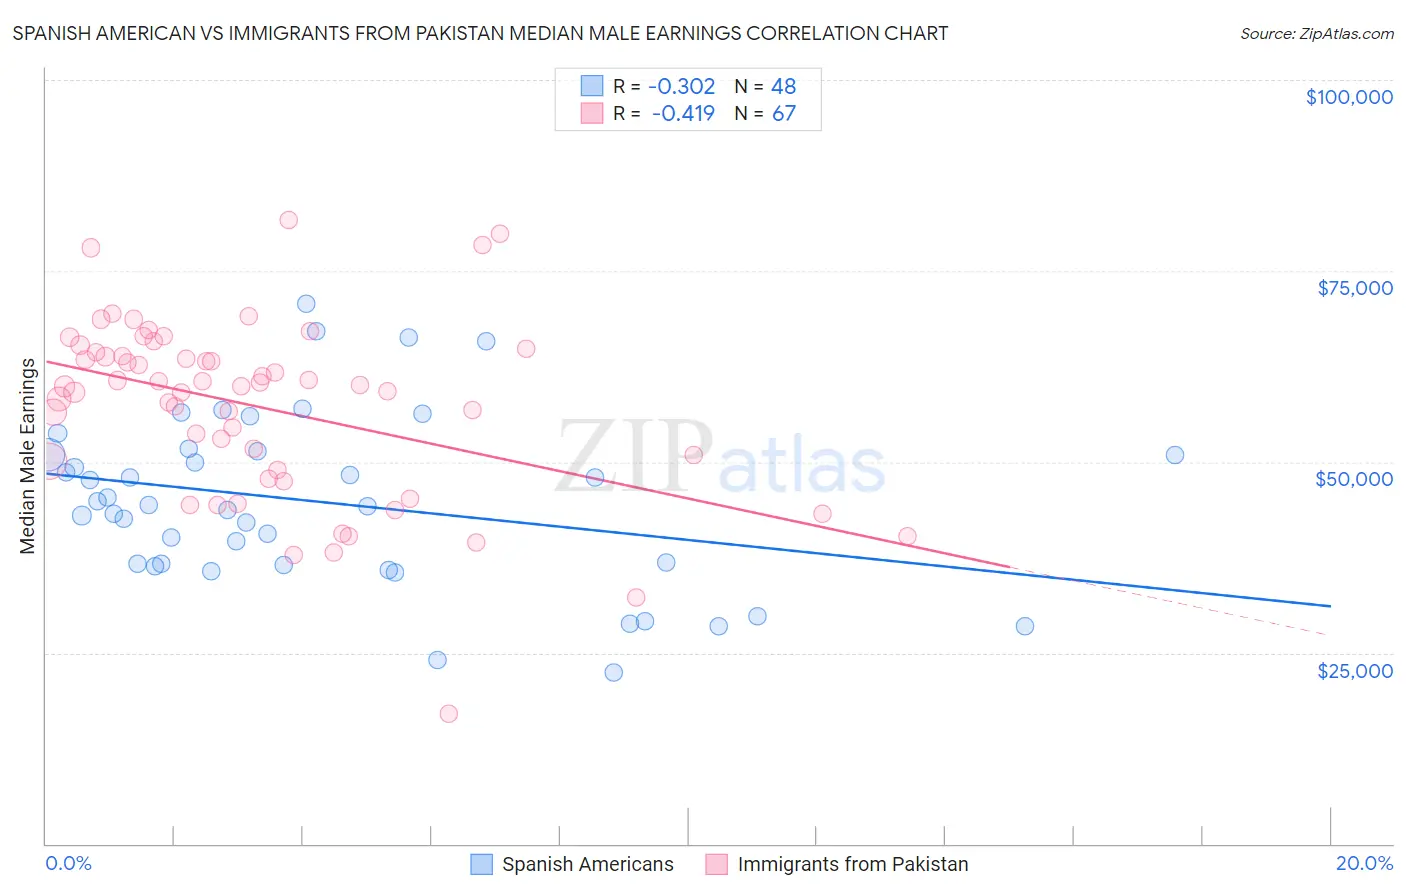 Spanish American vs Immigrants from Pakistan Median Male Earnings